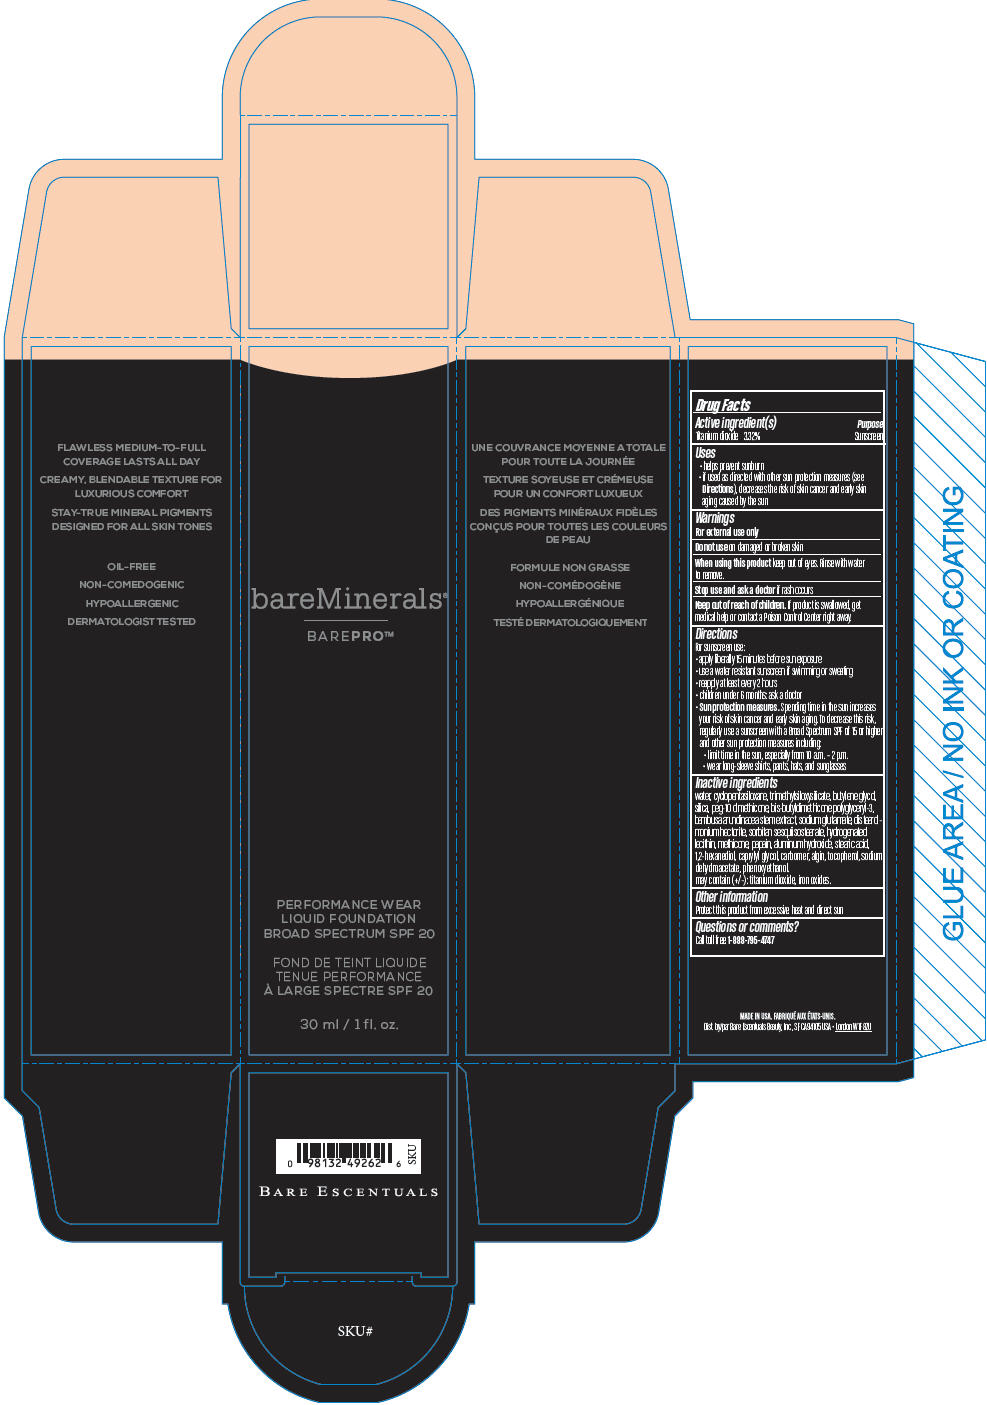 PRINCIPAL DISPLAY PANEL - 30 ml Bottle Carton - Warm Natural 12